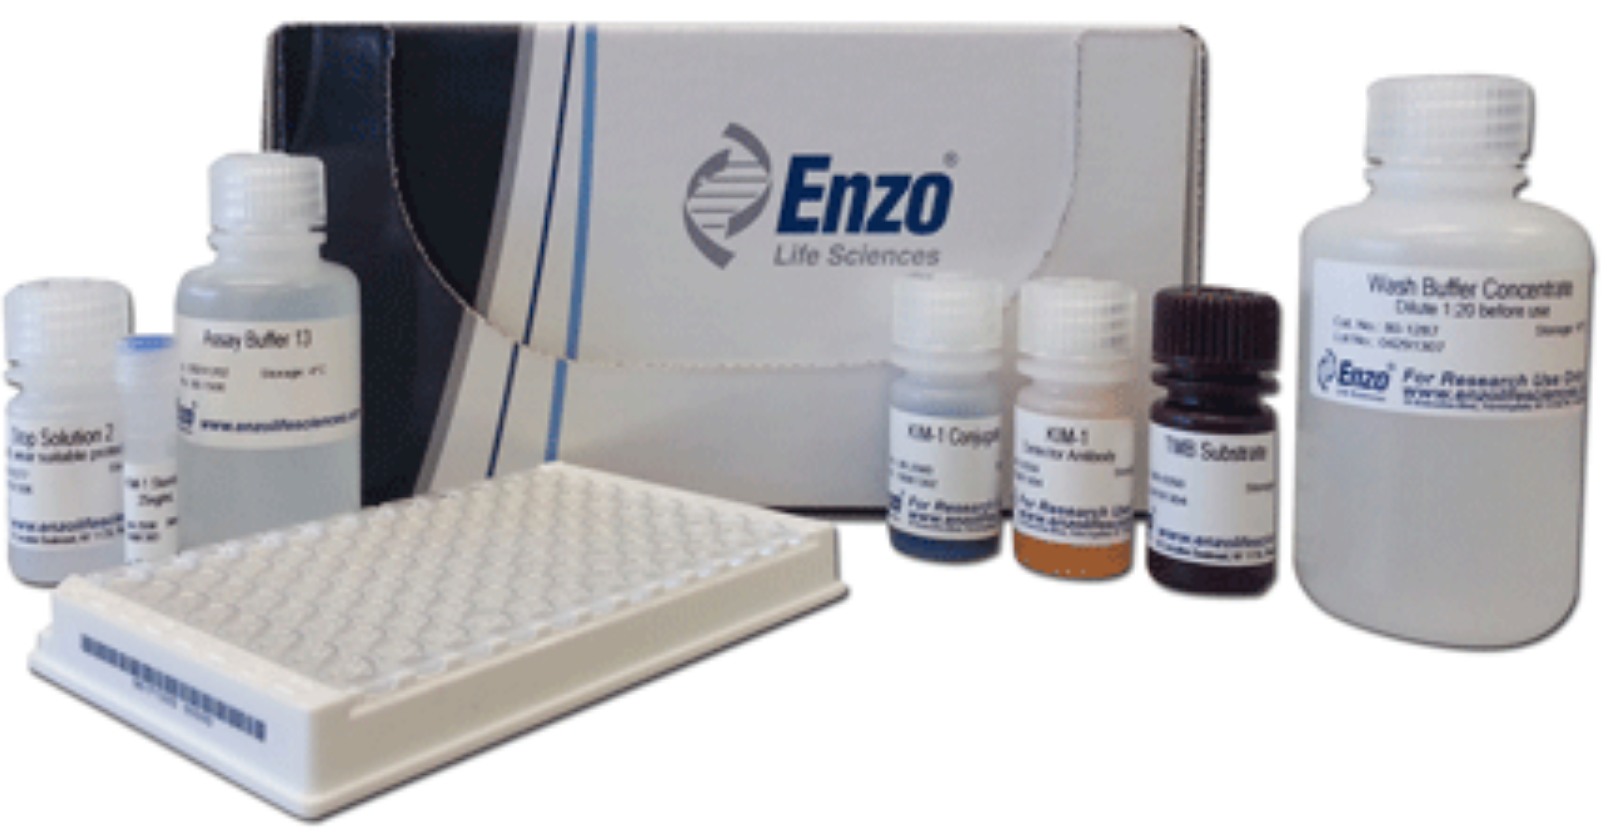 酶联免疫检测肾损伤分子-1试剂盒KIM-1 (human) ELISA kit—Enzo Life Sciences热销产品